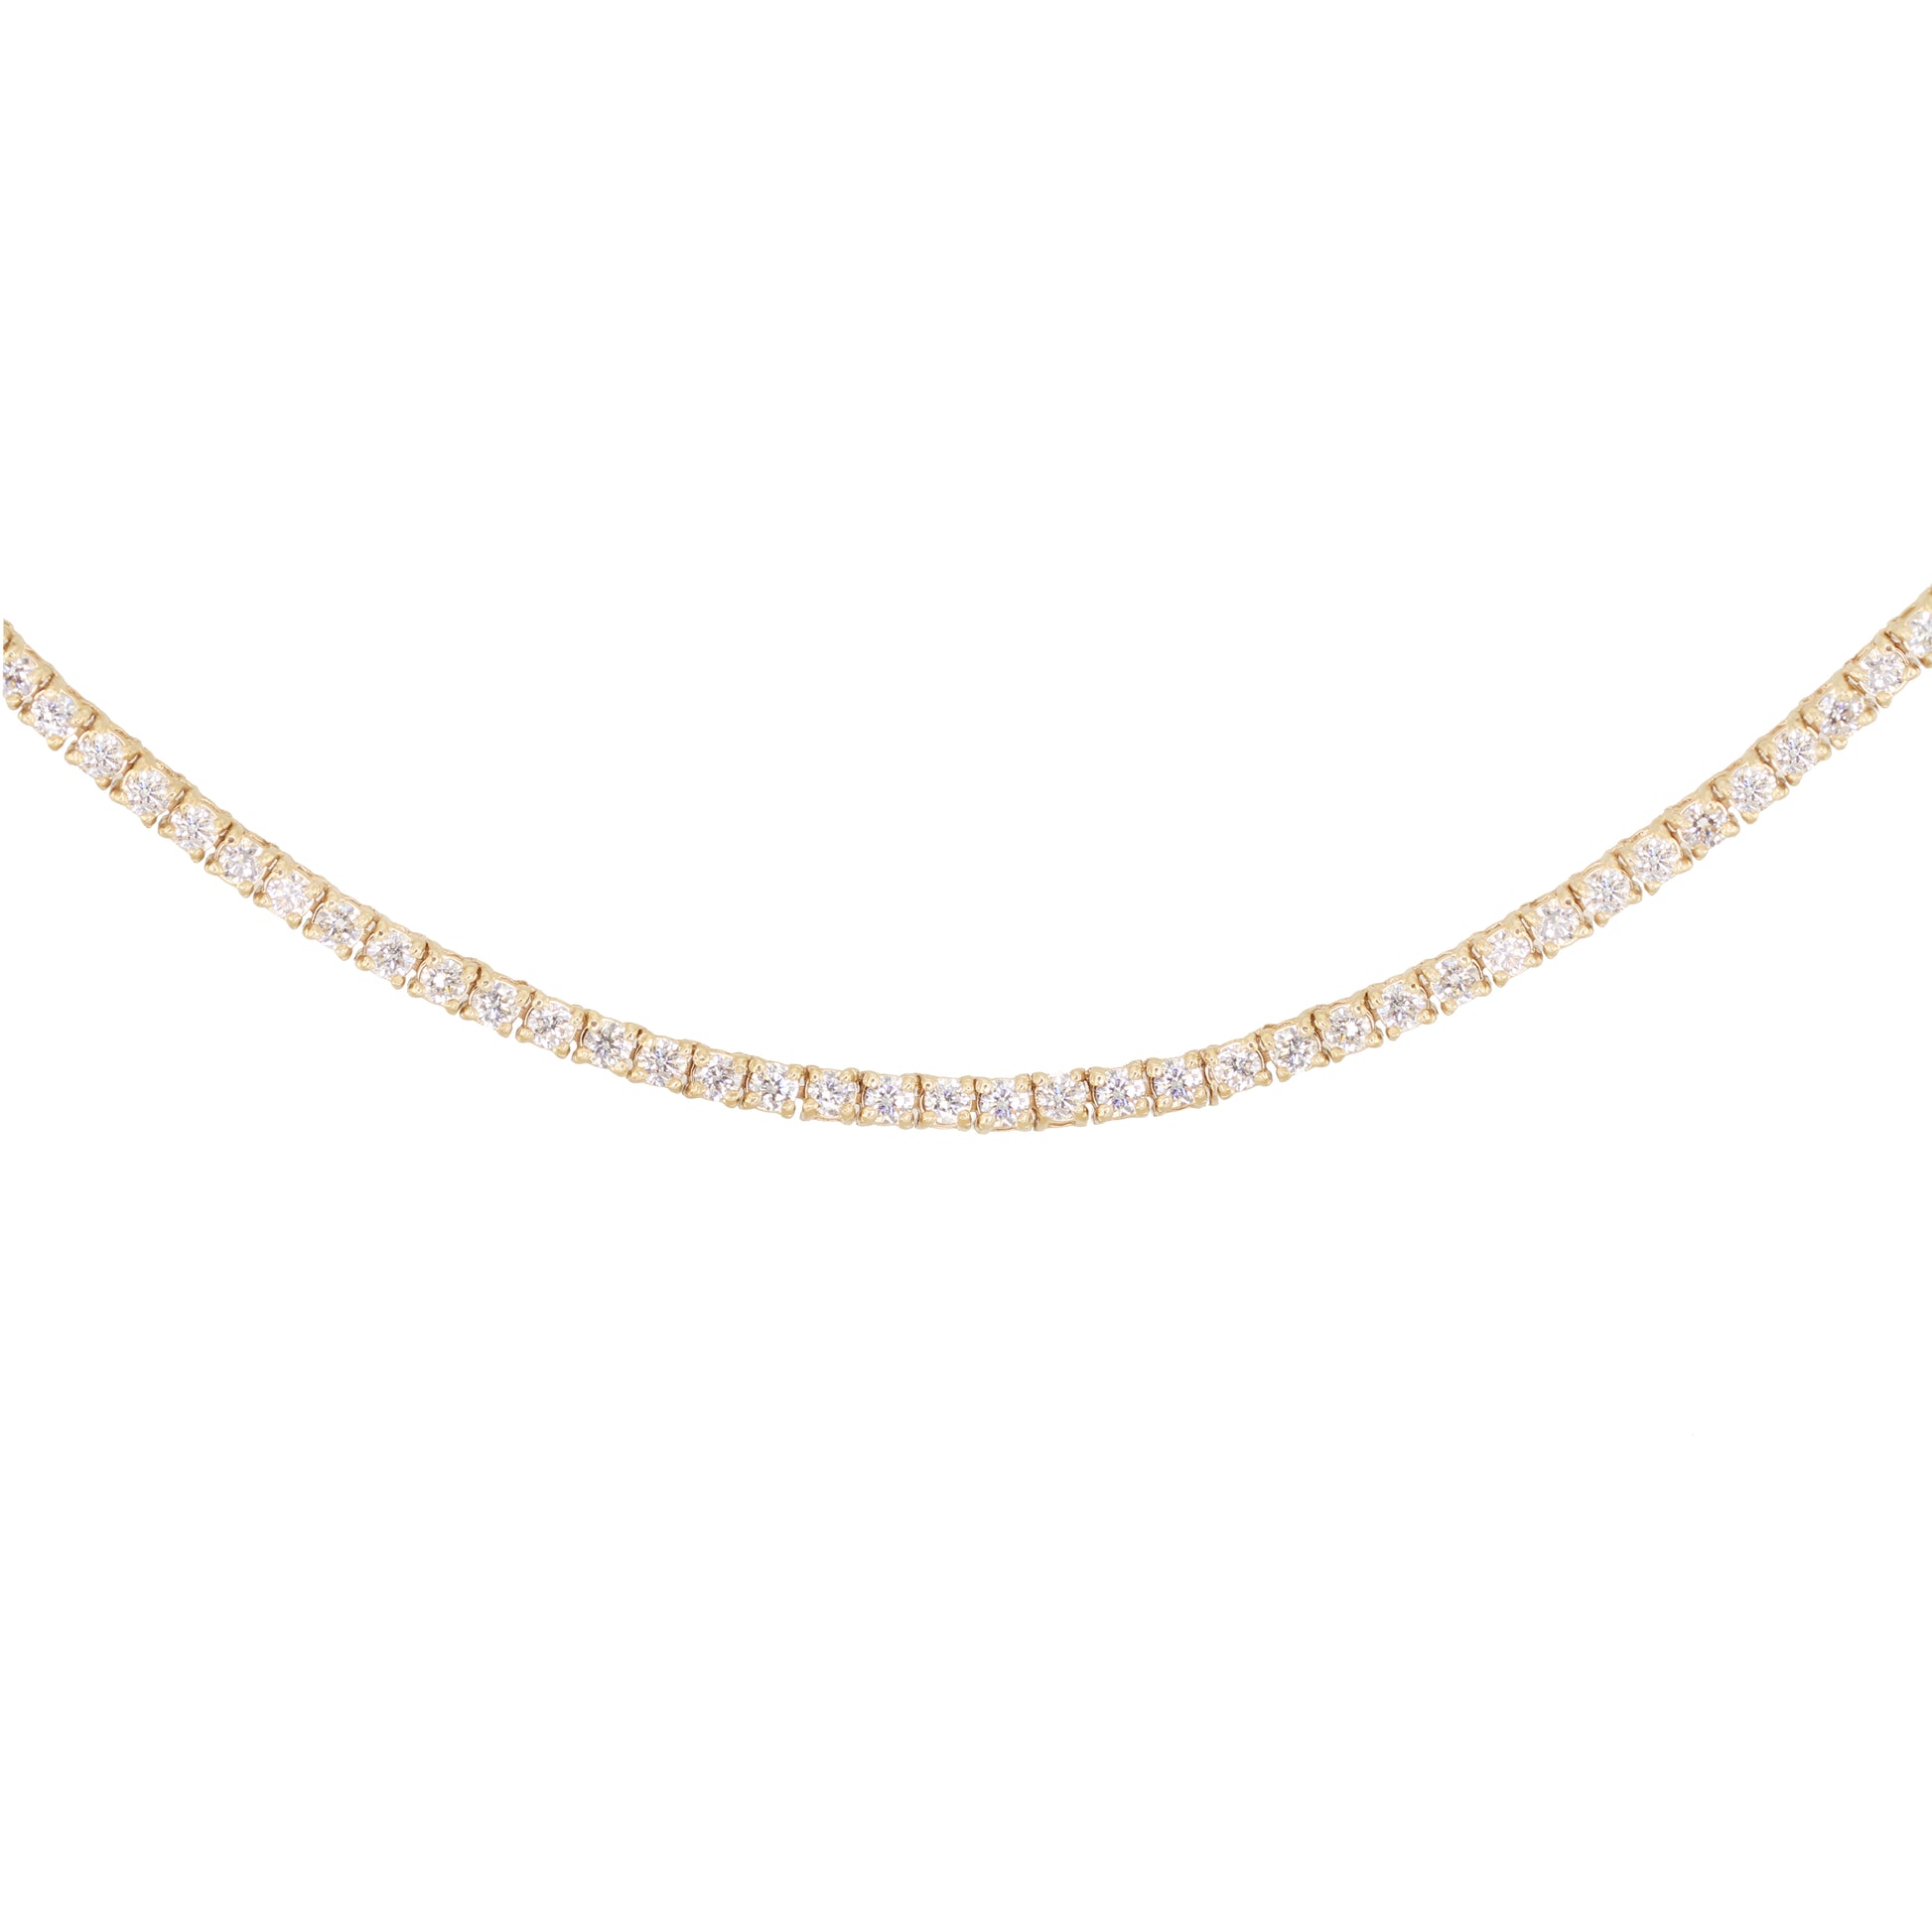 14kt gold and diamond tennis necklace - Luna Skye